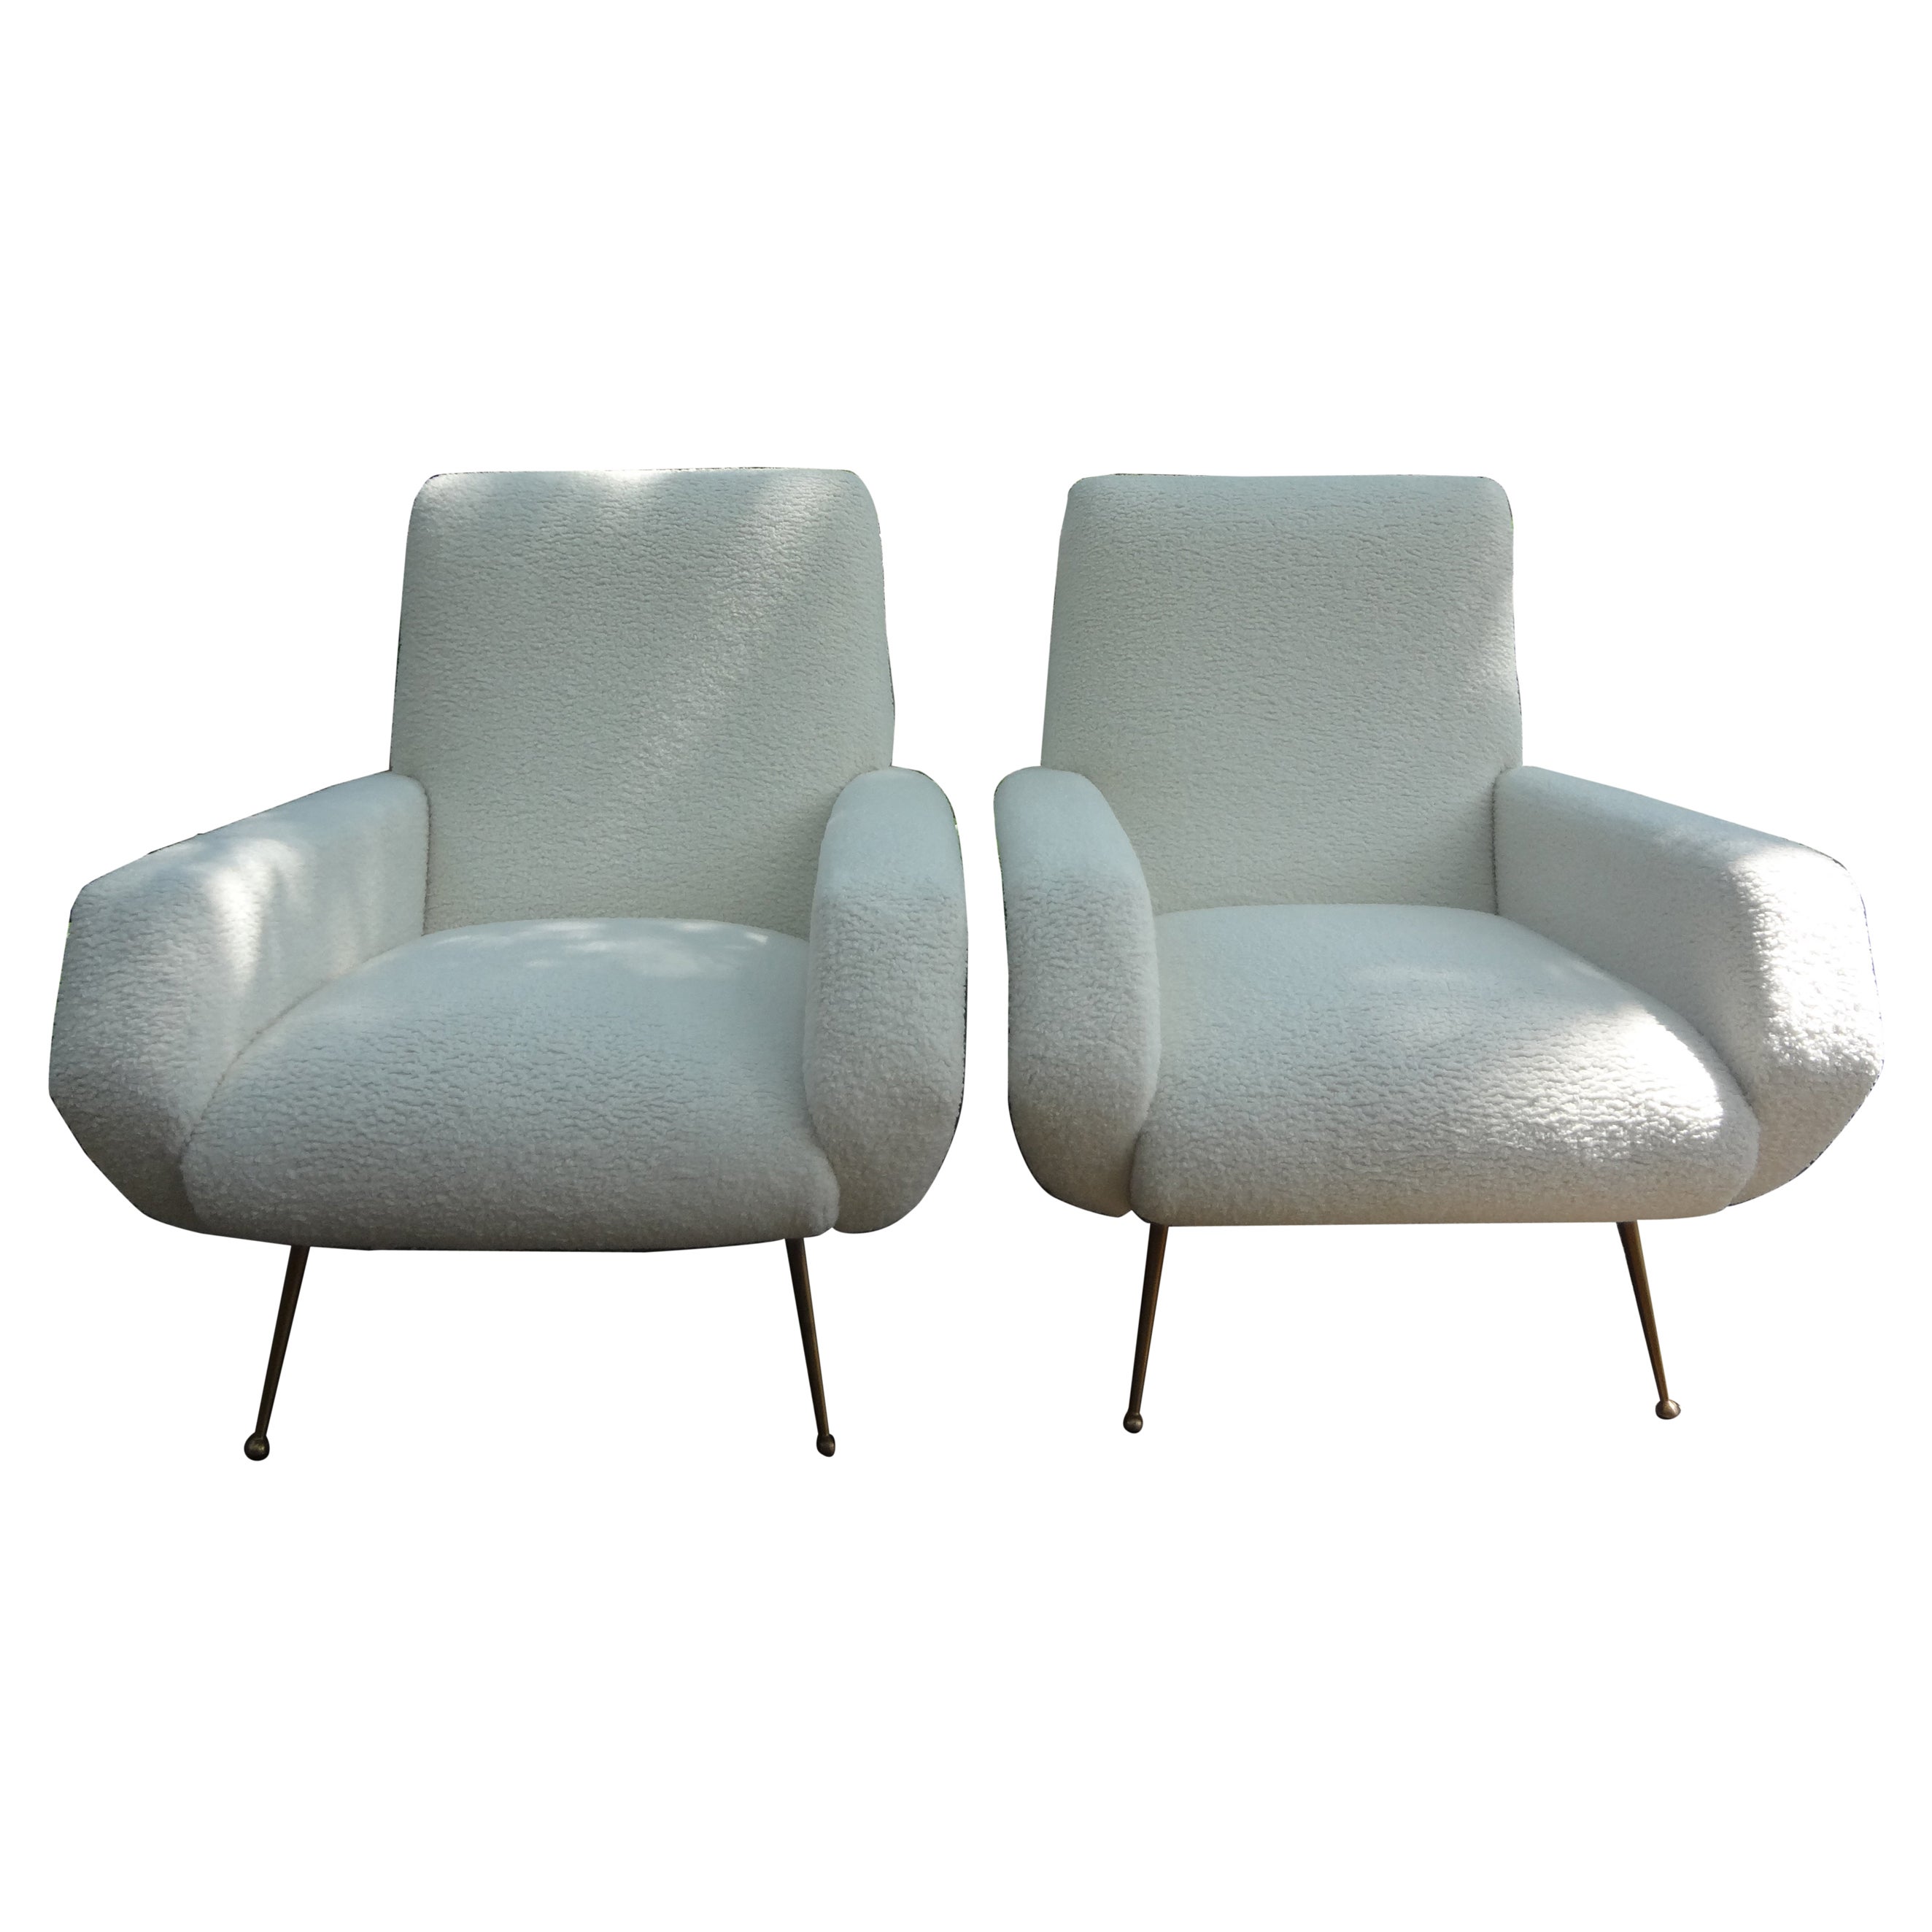 Pair of Italian Modern Gio Ponti Inspired Lounge Chairs